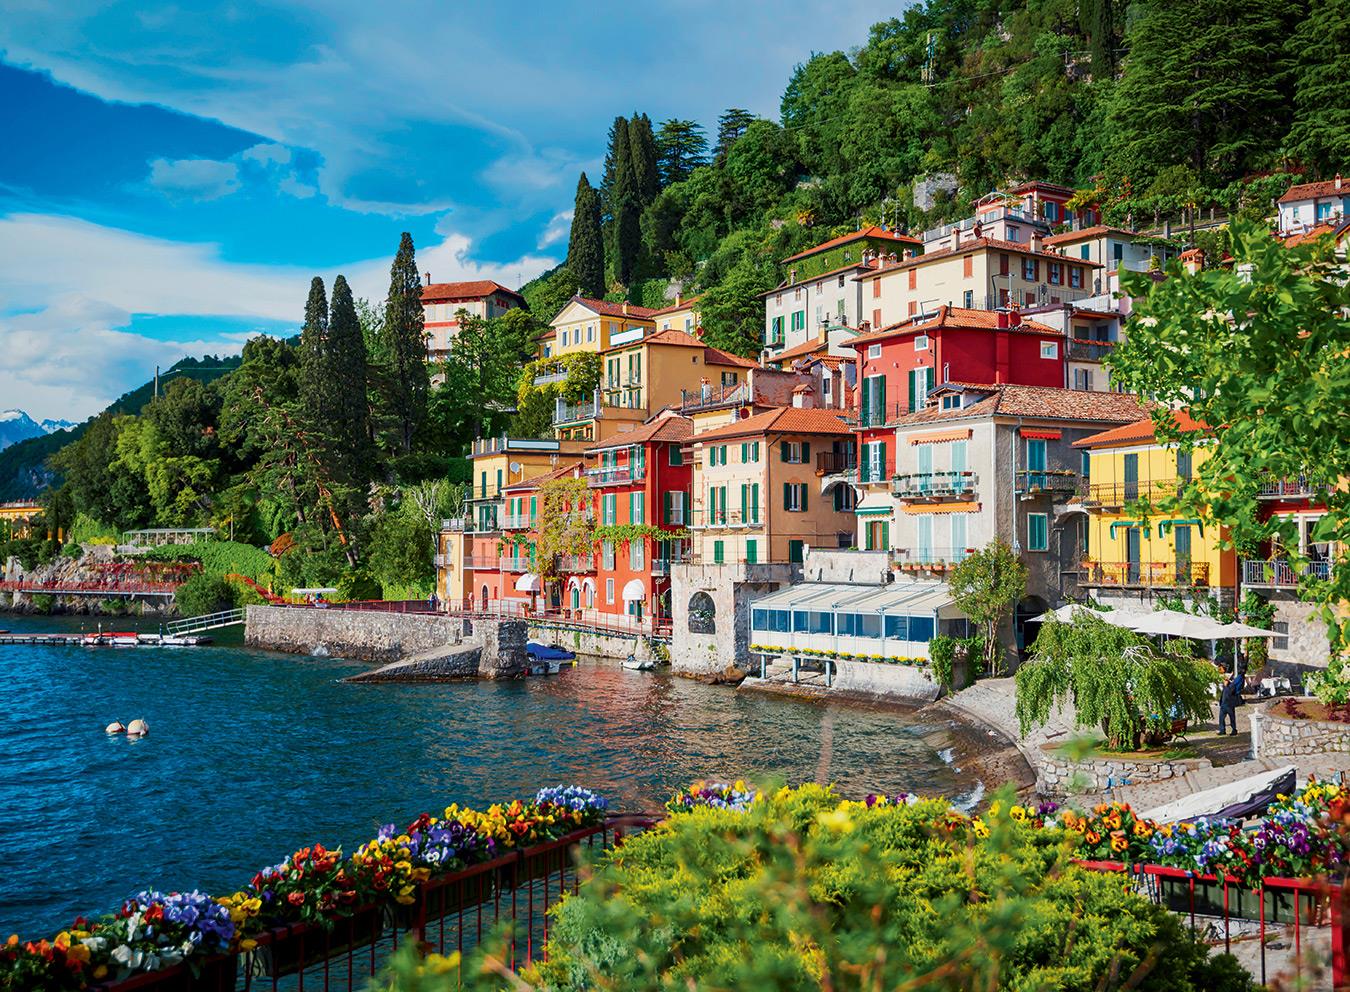 Ravensburger Lake Como, Italy Jigsaw Puzzle (500 Pieces)